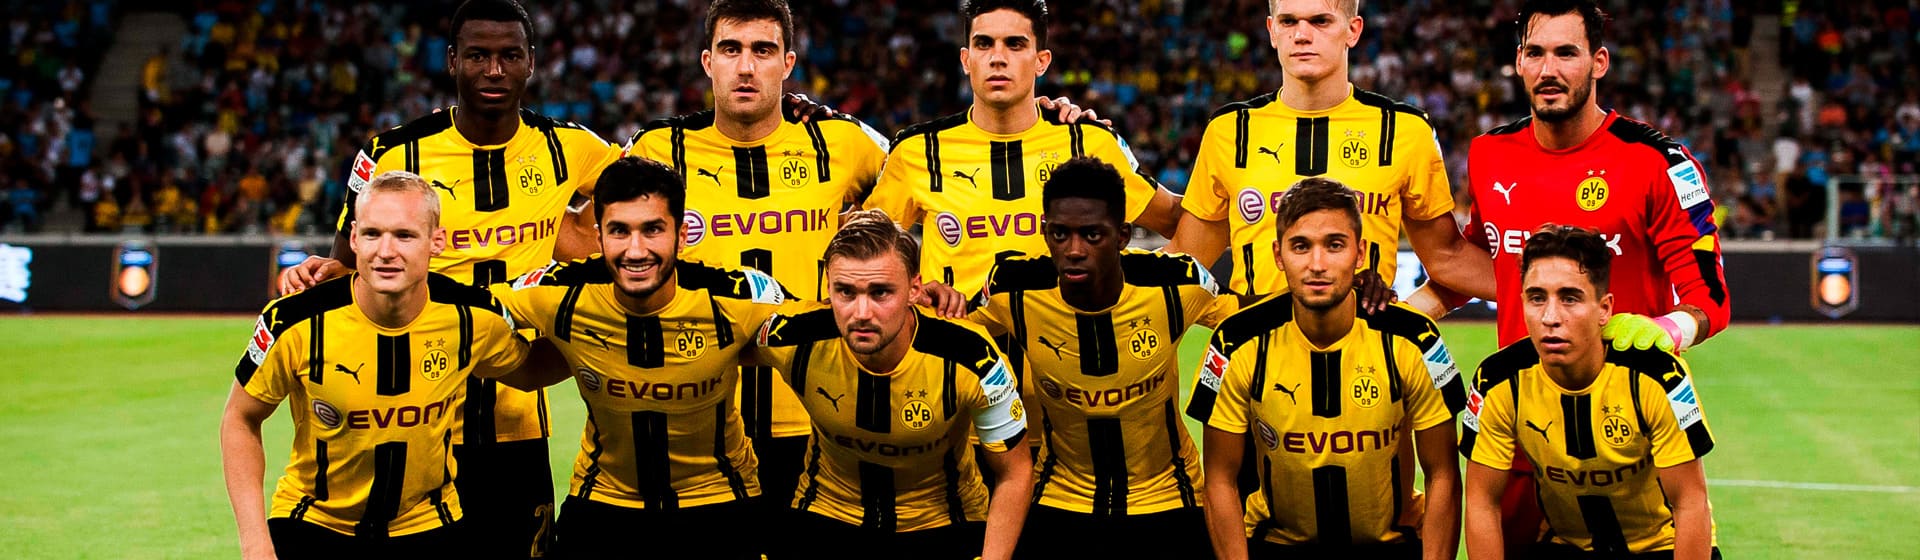 FC Borussia Dortmund - Костюмы